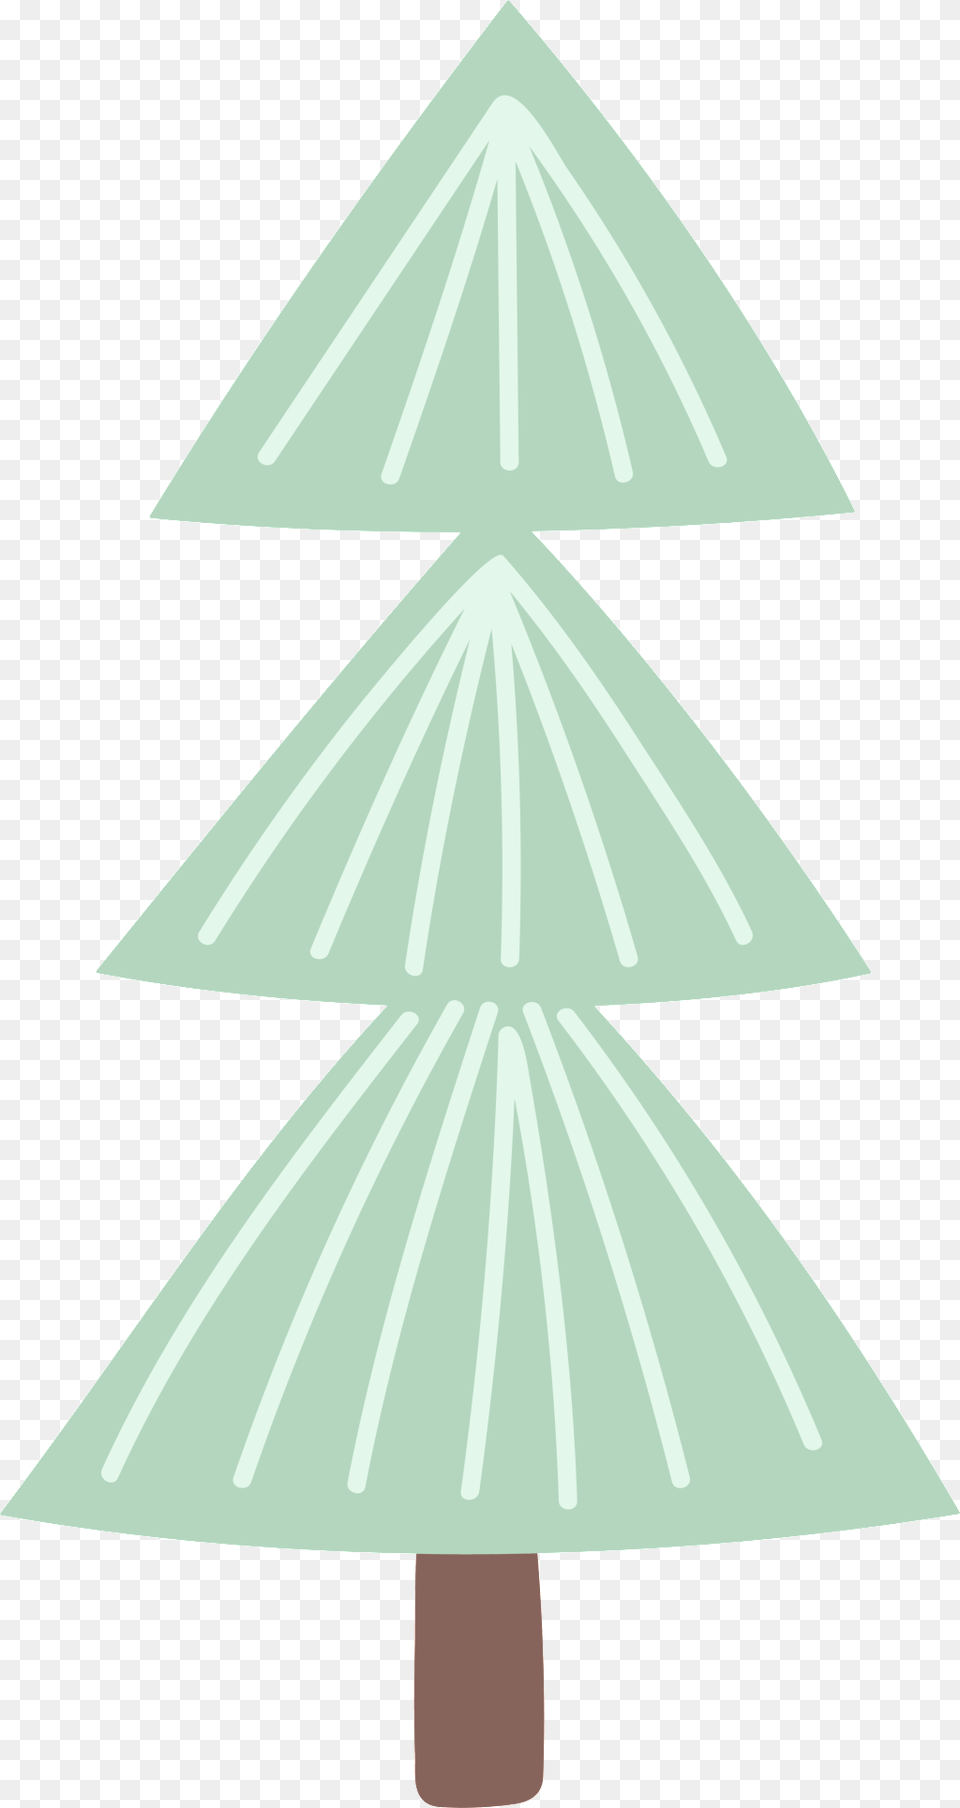 Triangle Branch Christmas Cartoon Christmas Tree, Weapon, Arrow, Arrowhead, Cross Png Image